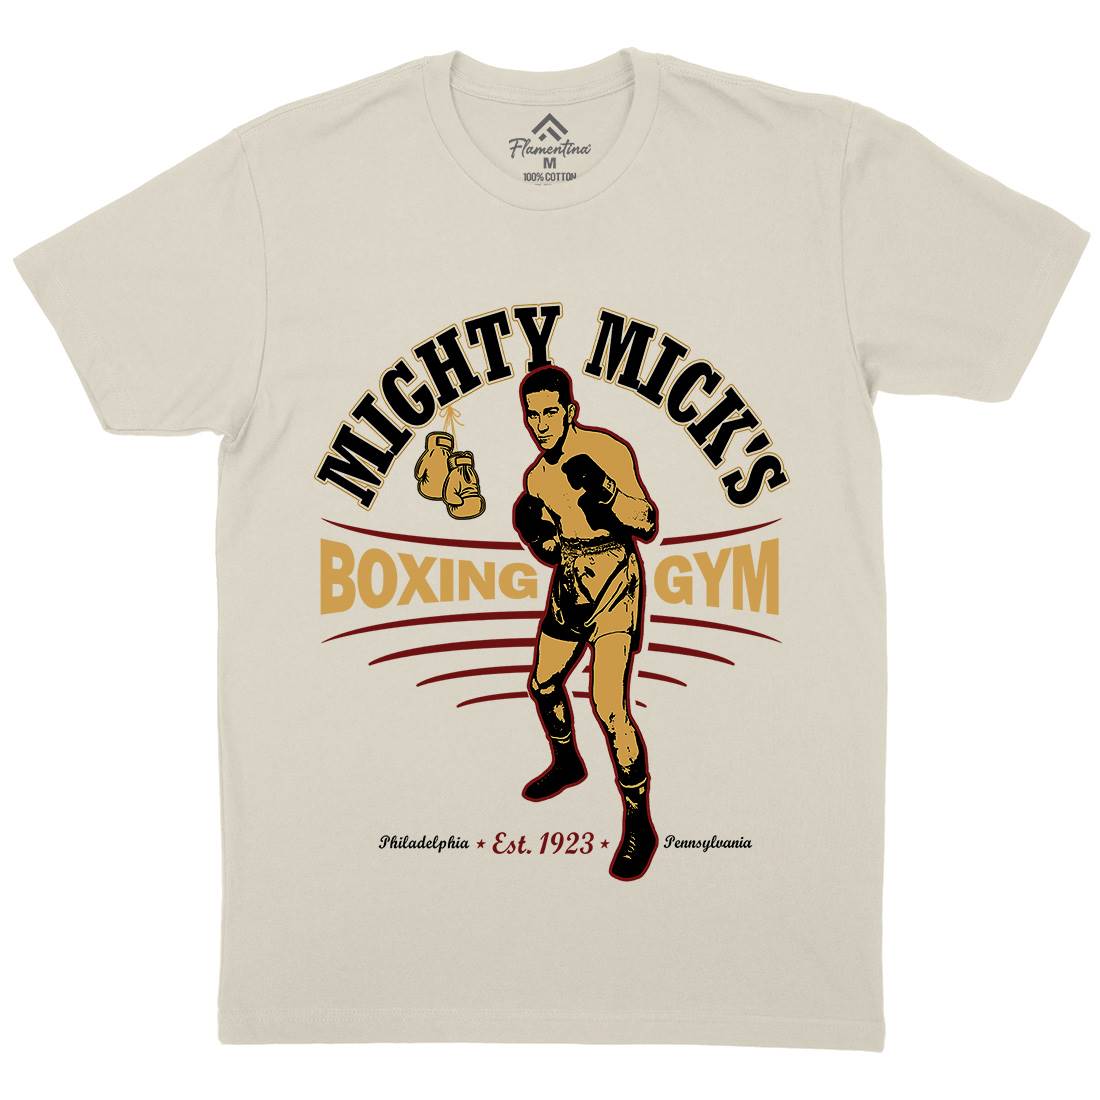 Mighty Micks Gym Mens Organic Crew Neck T-Shirt Sport D276